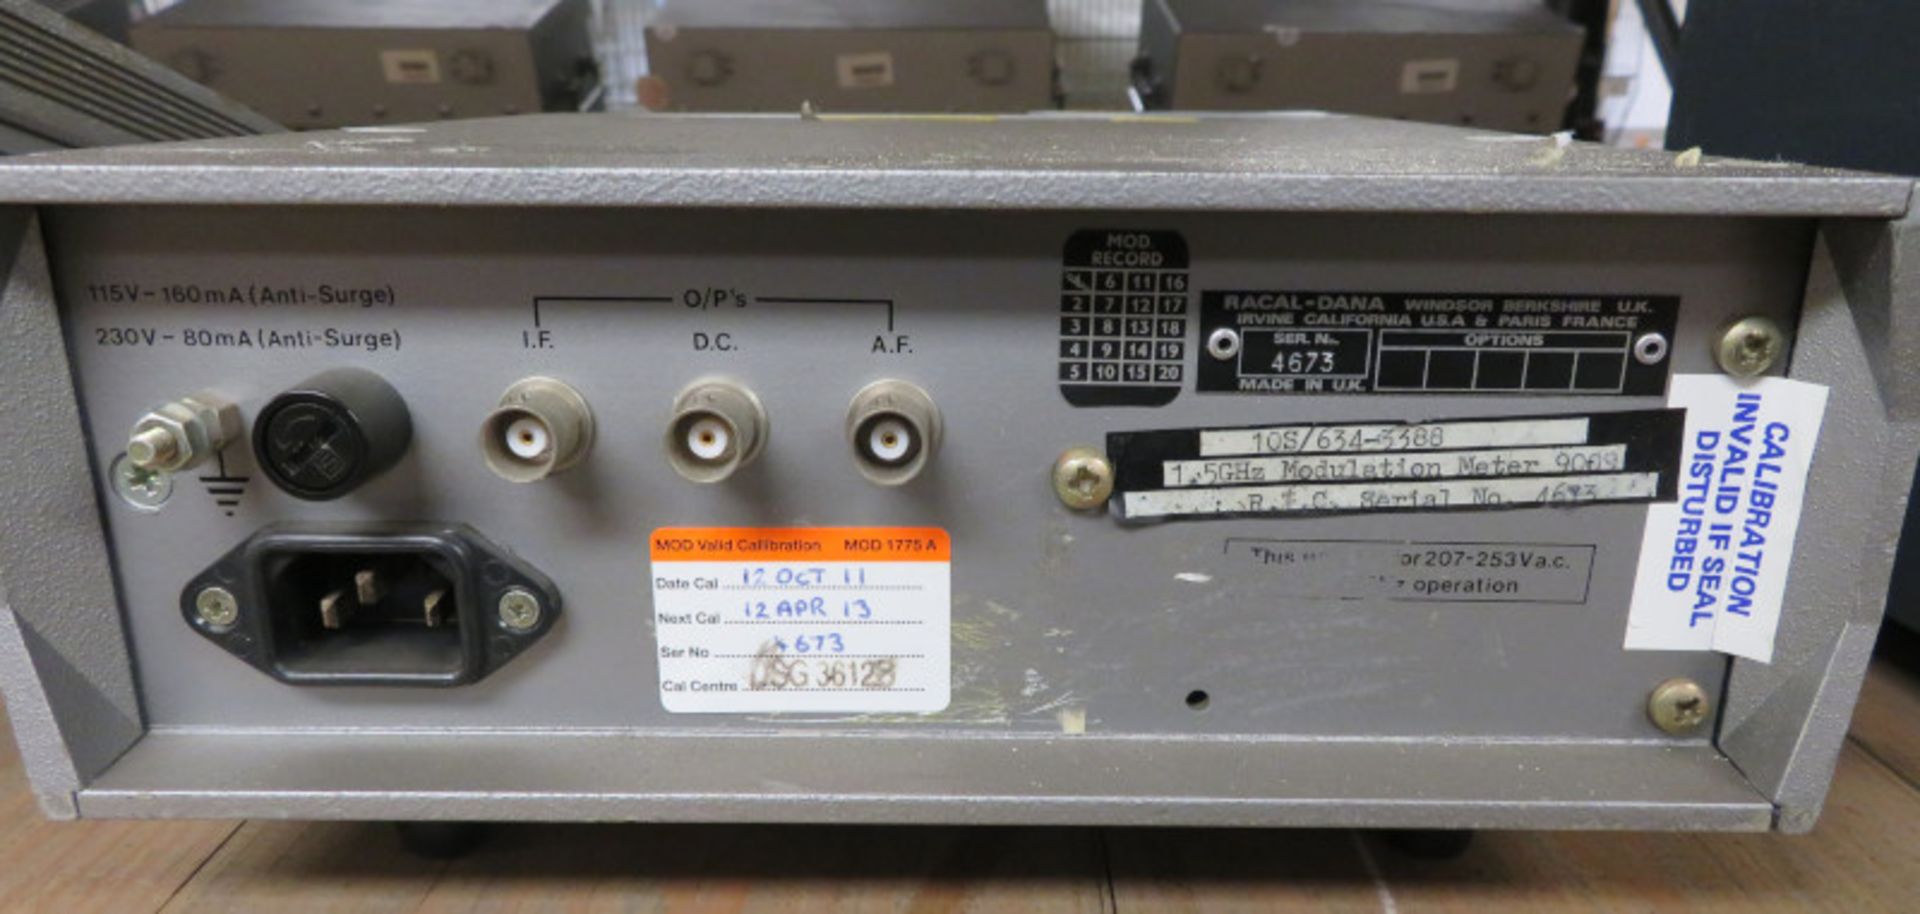 Racal-Dana 9009 Modulation Meter - No Handle - Image 3 of 3